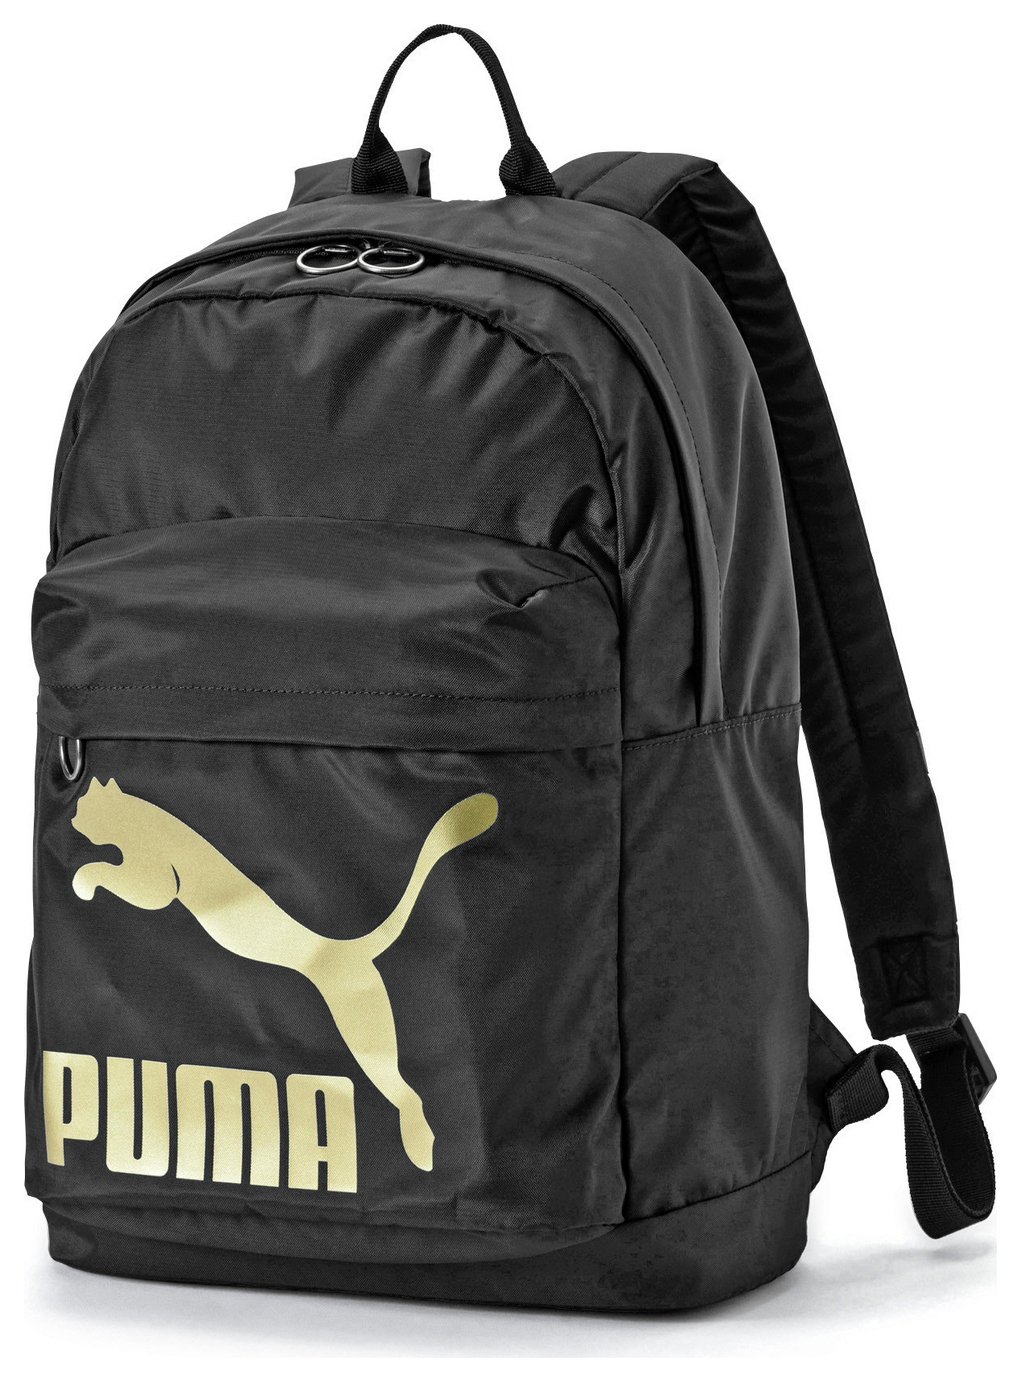 Puma Original 20L Backpack - Black and Gold